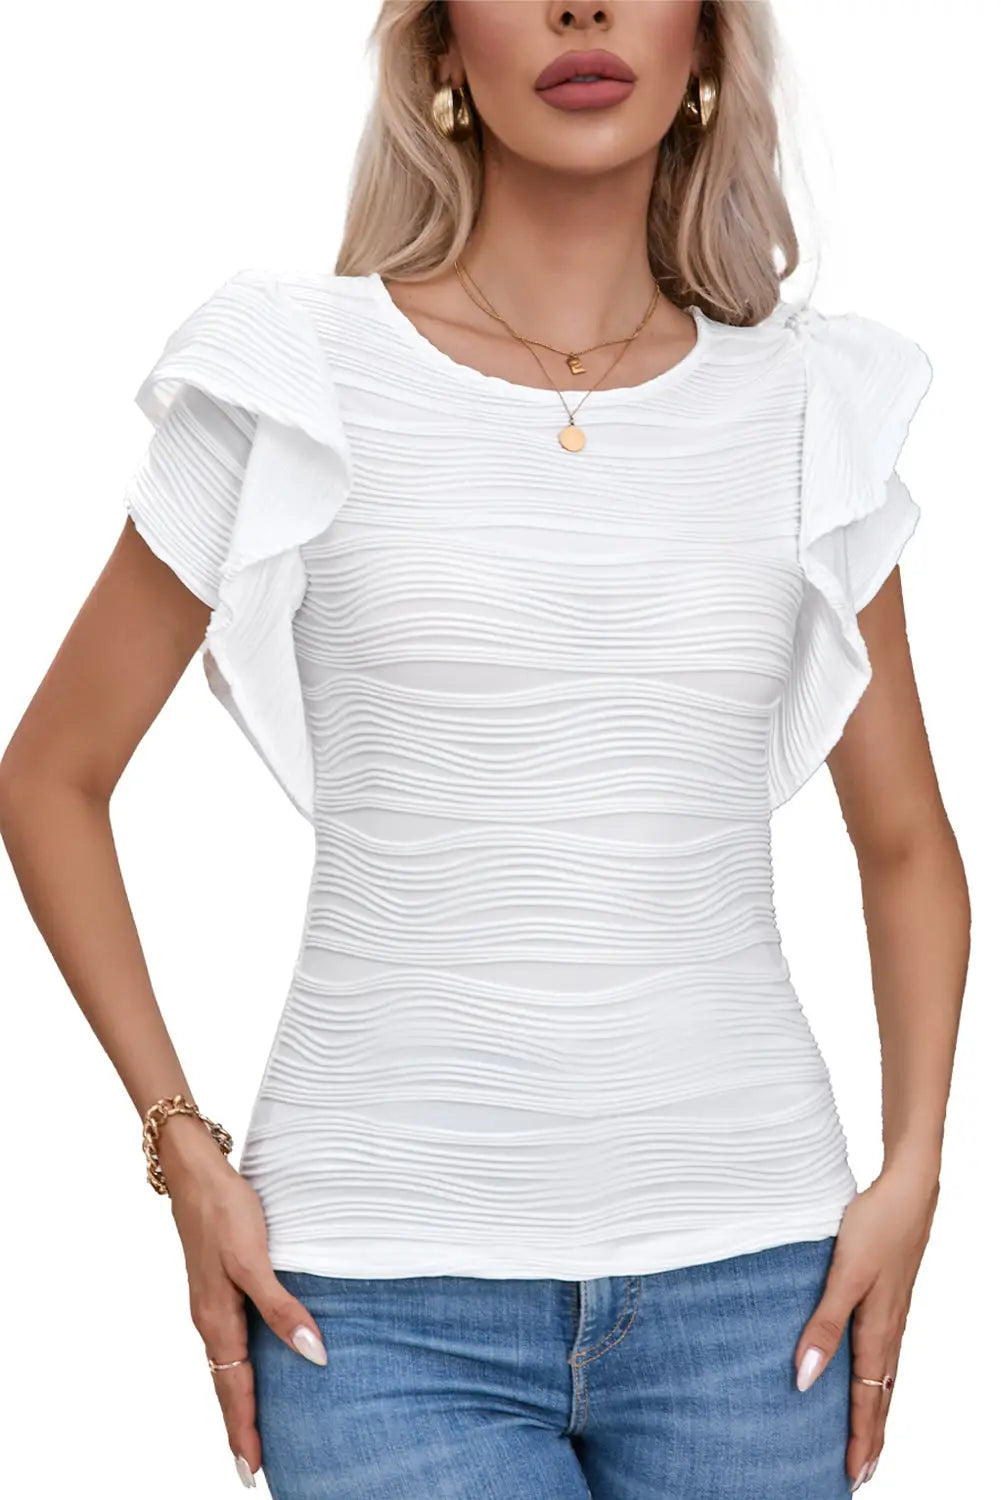 White wavy texture drop shoulder long sleeve top - tops